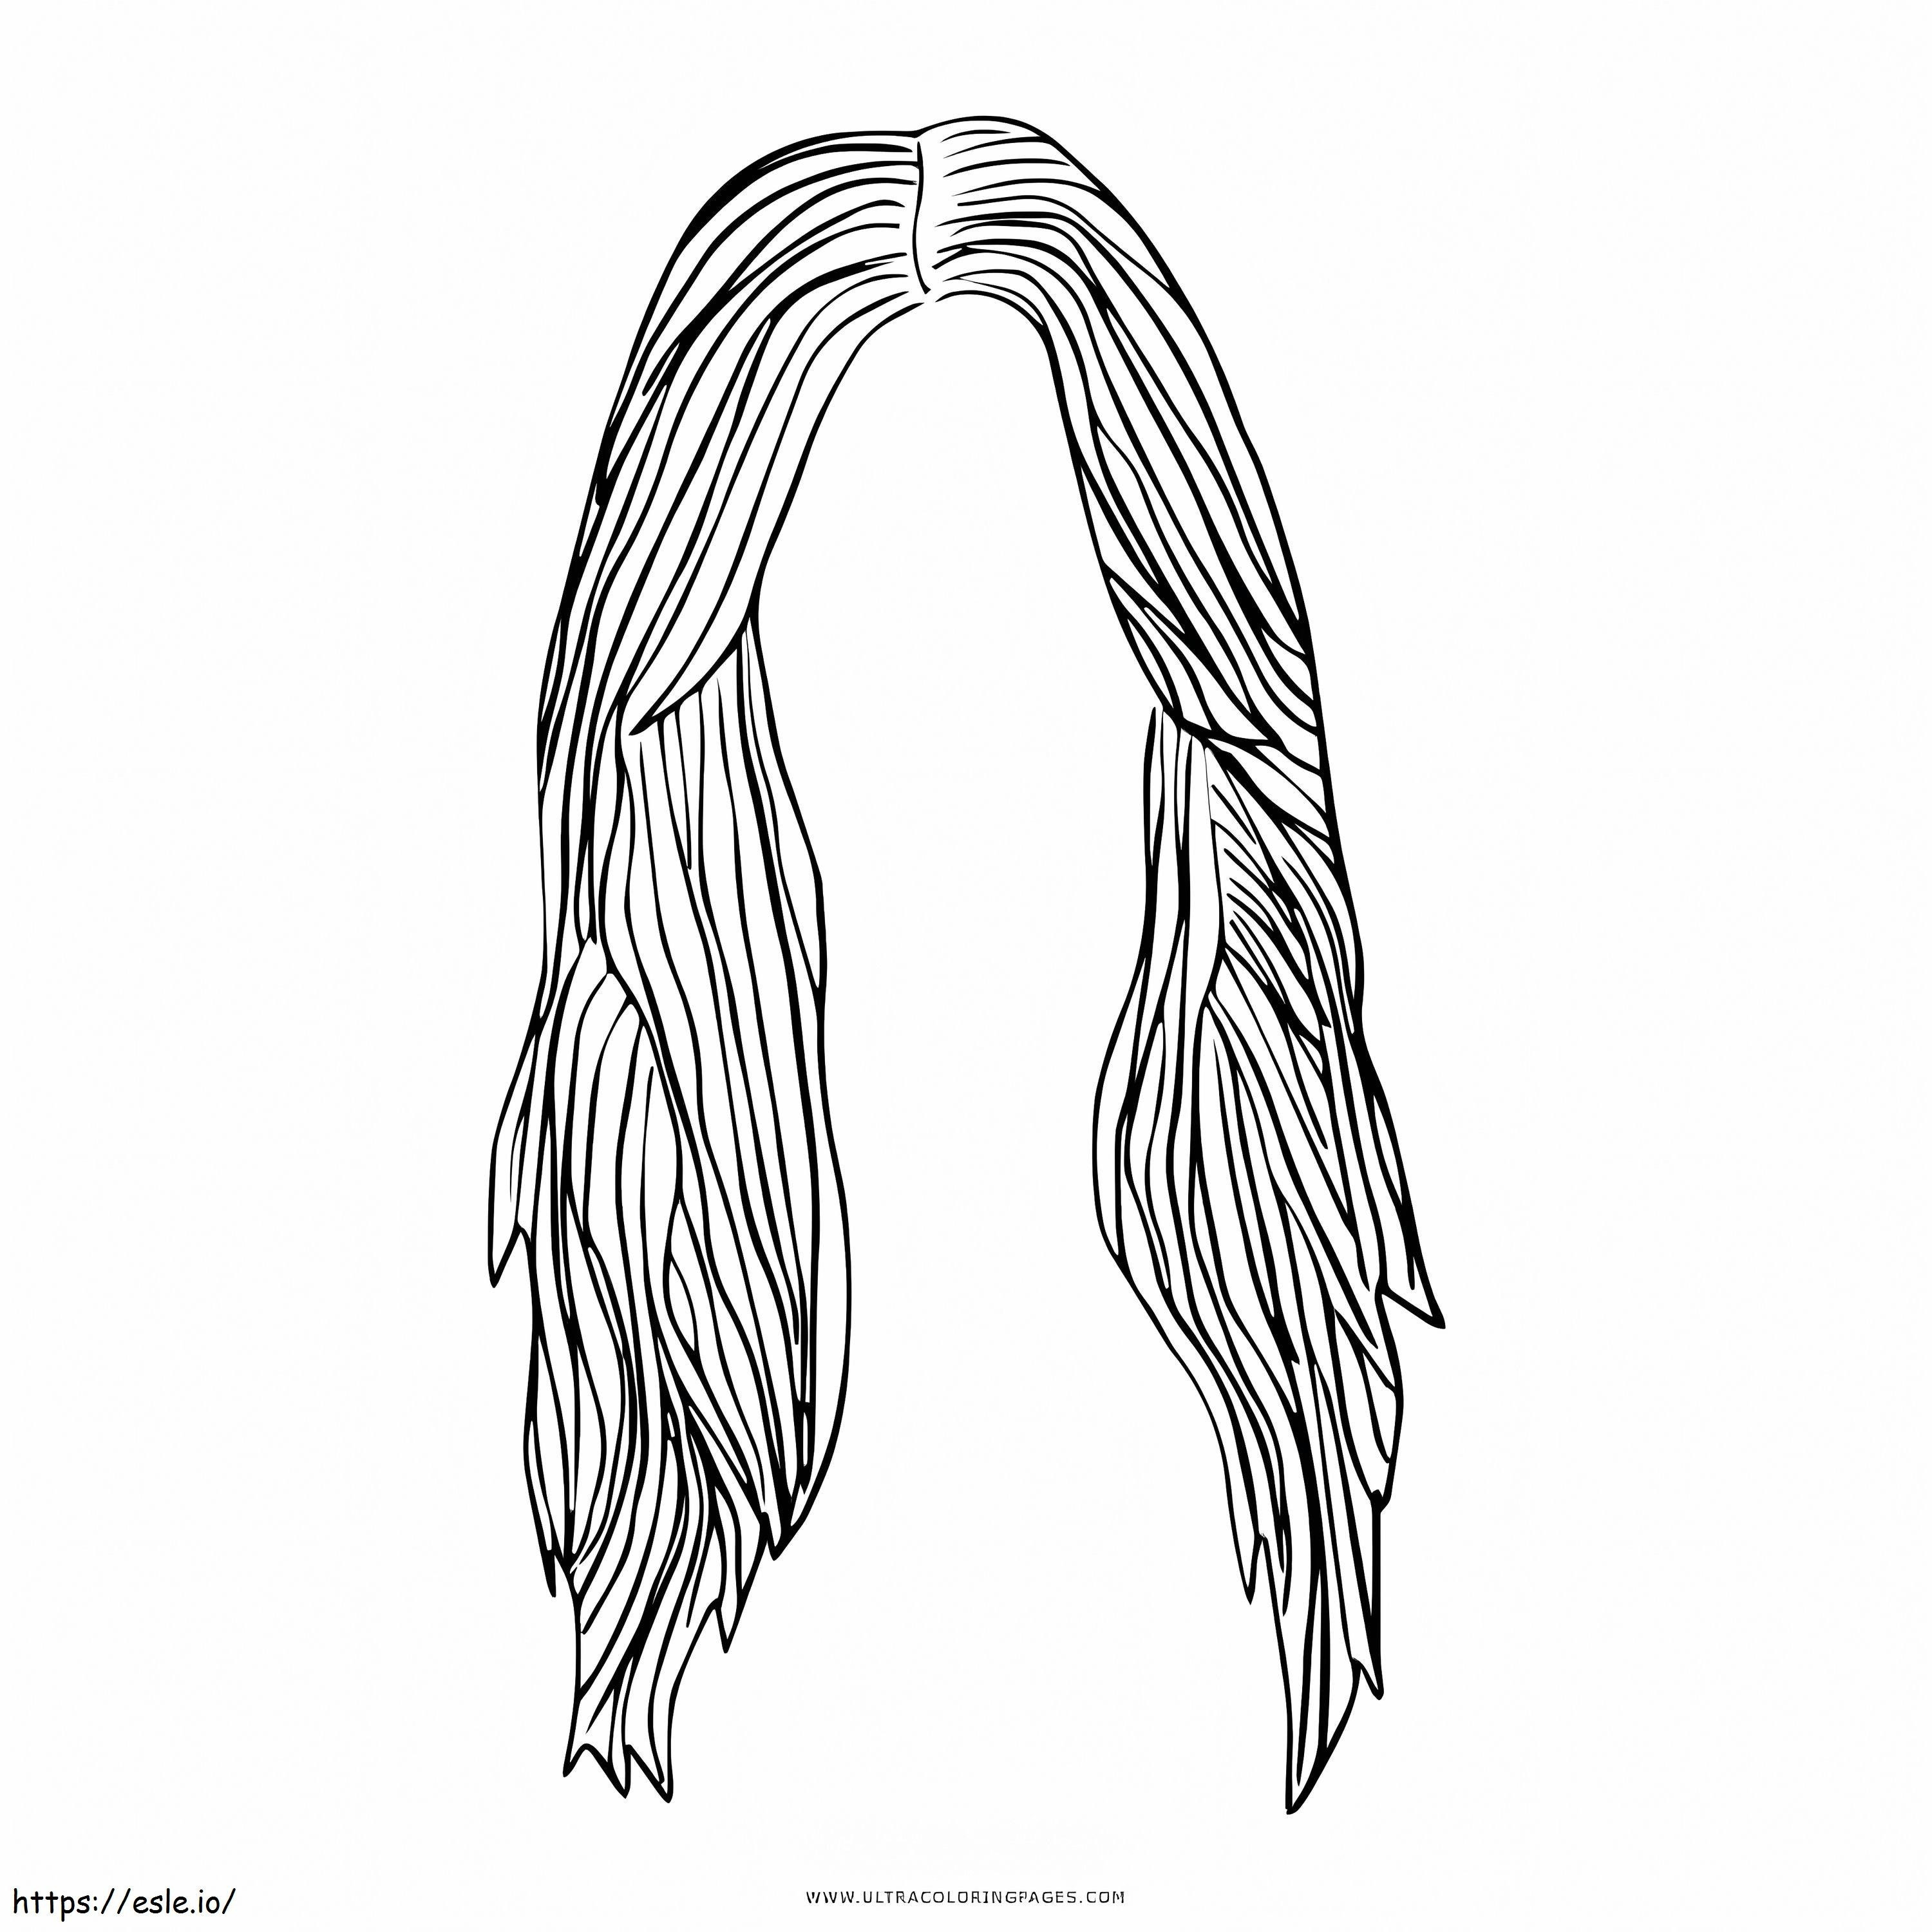 Langes Haar 3 ausmalbilder